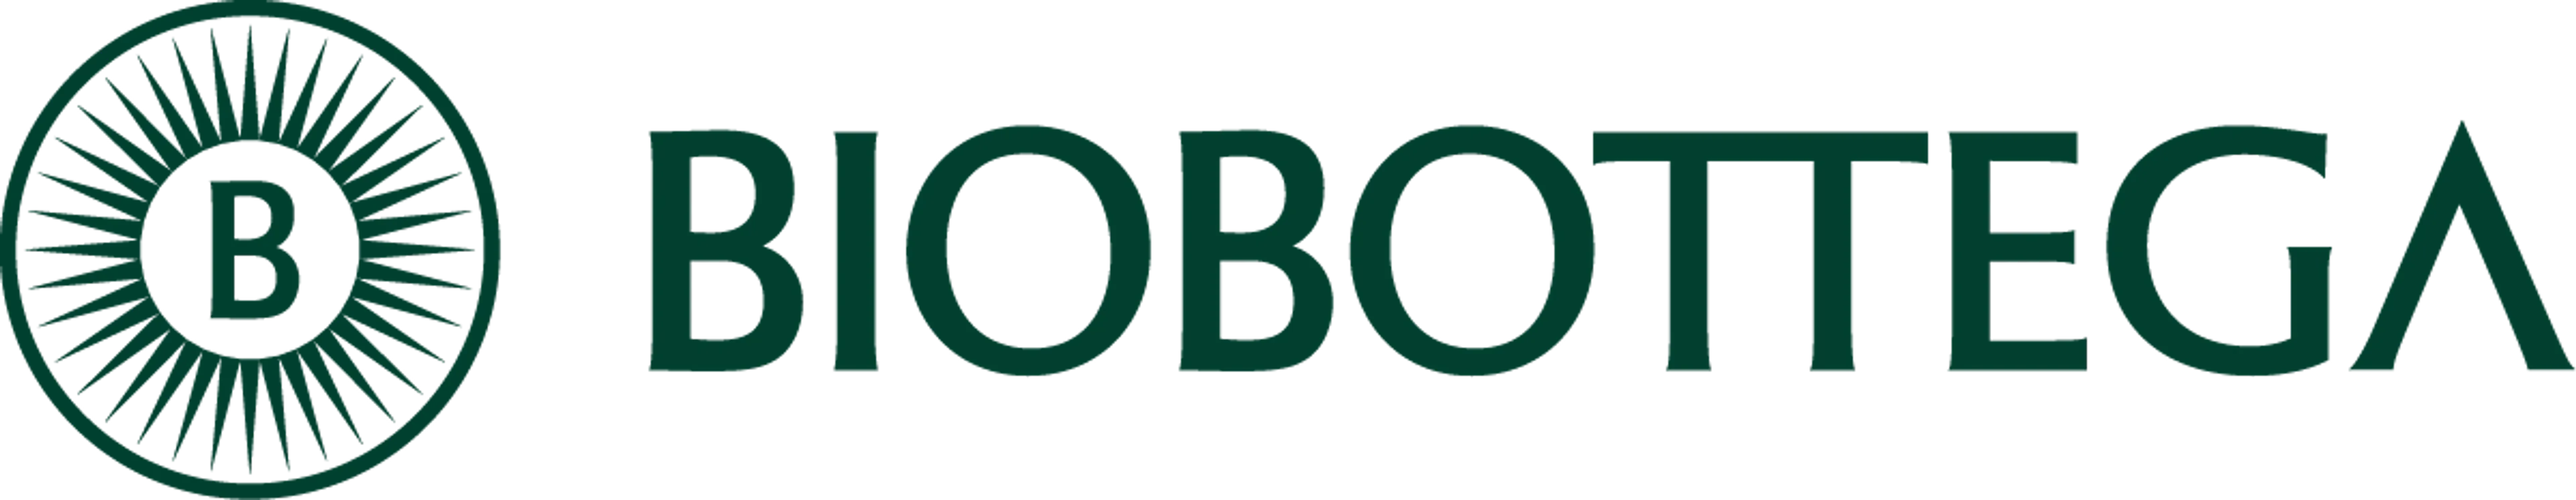 BIOBOTTEGA logo